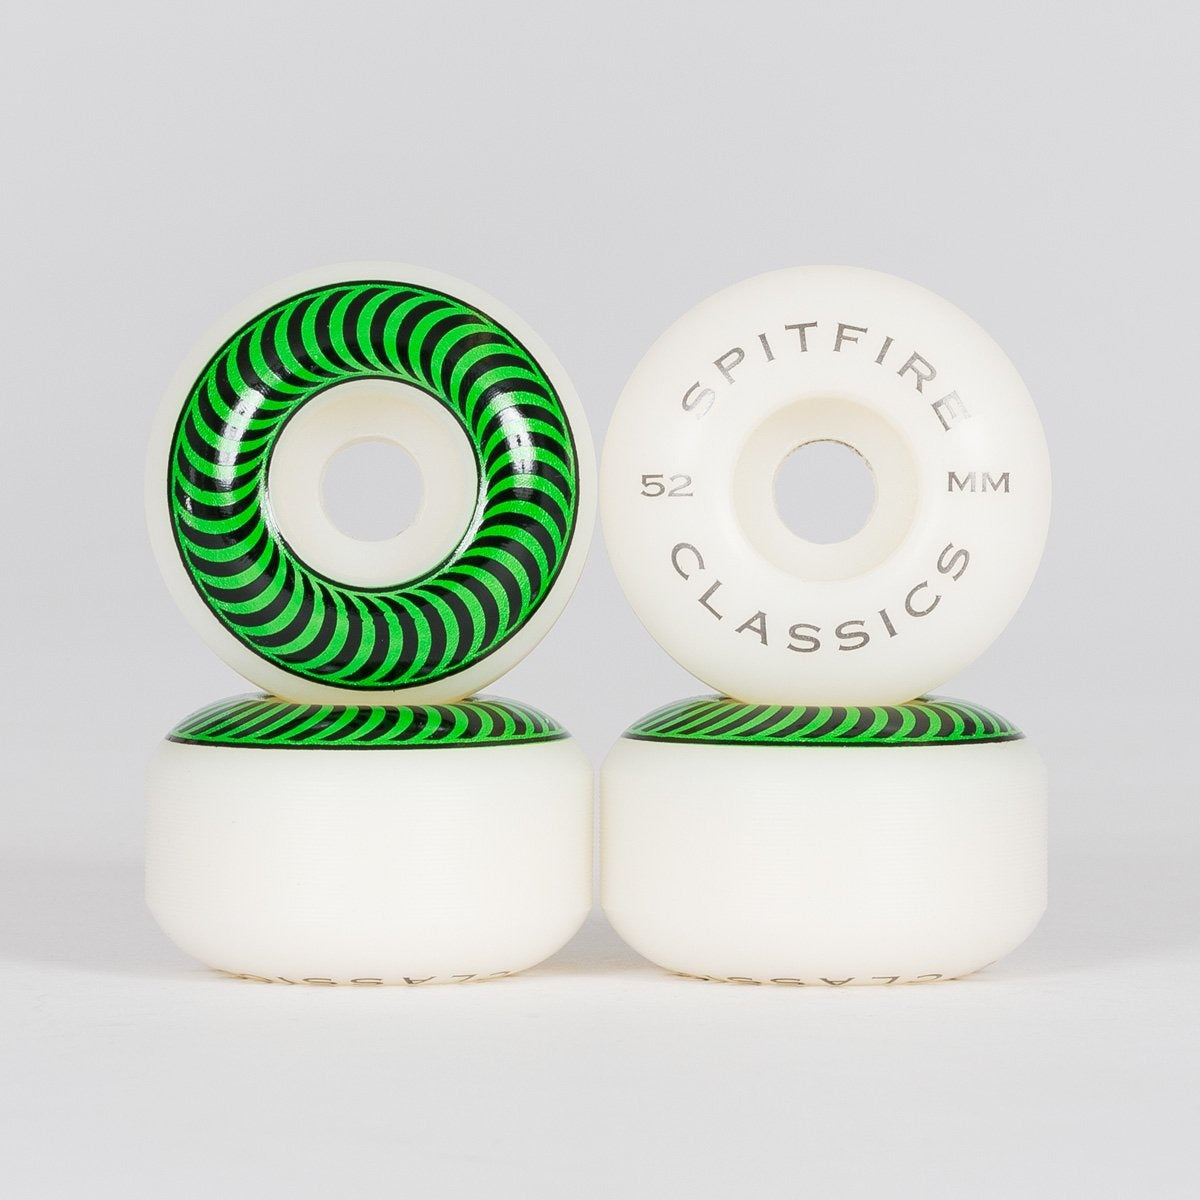 Spitfire Classic Wheels White/Green 52mm - Skateboard